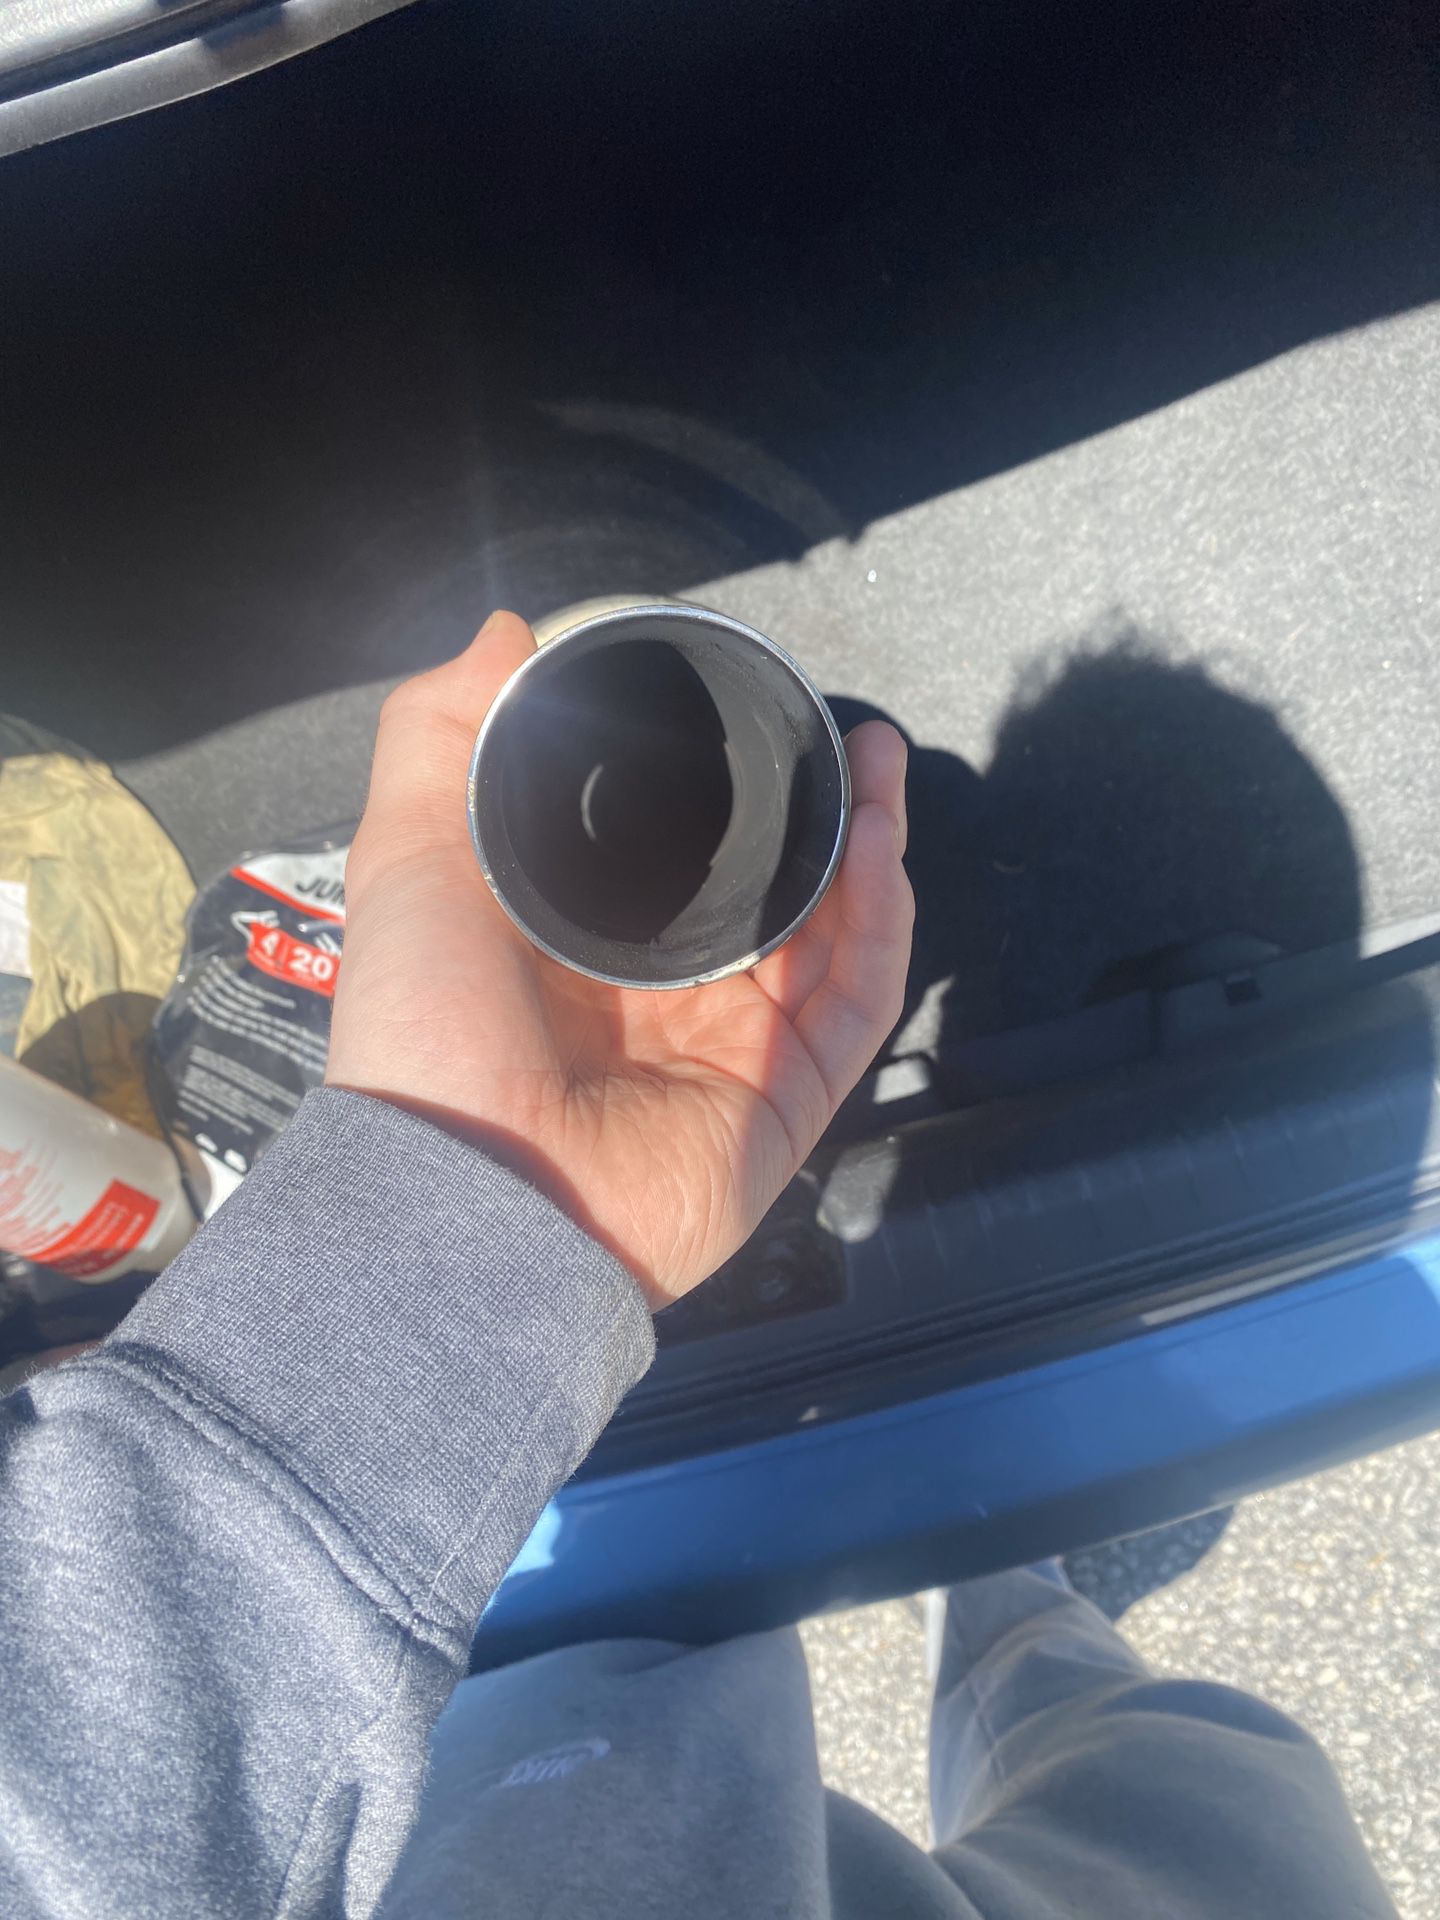 Aftermarket exhaust tip and muffler